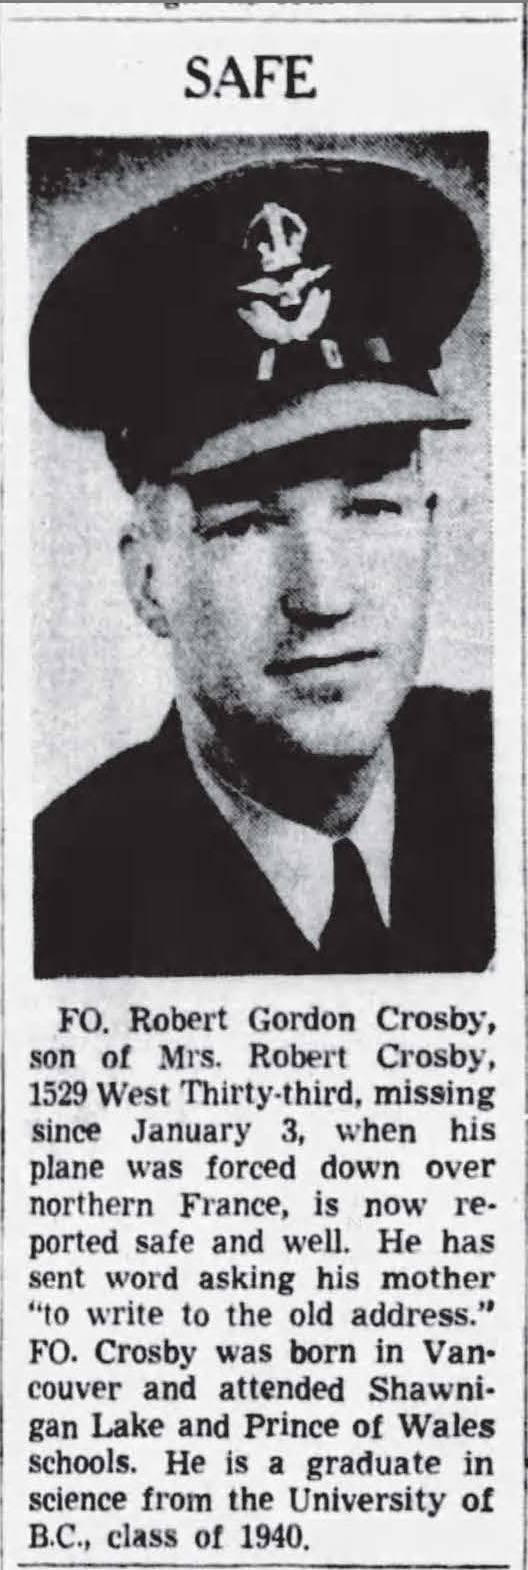 Robert Gordon Crosby